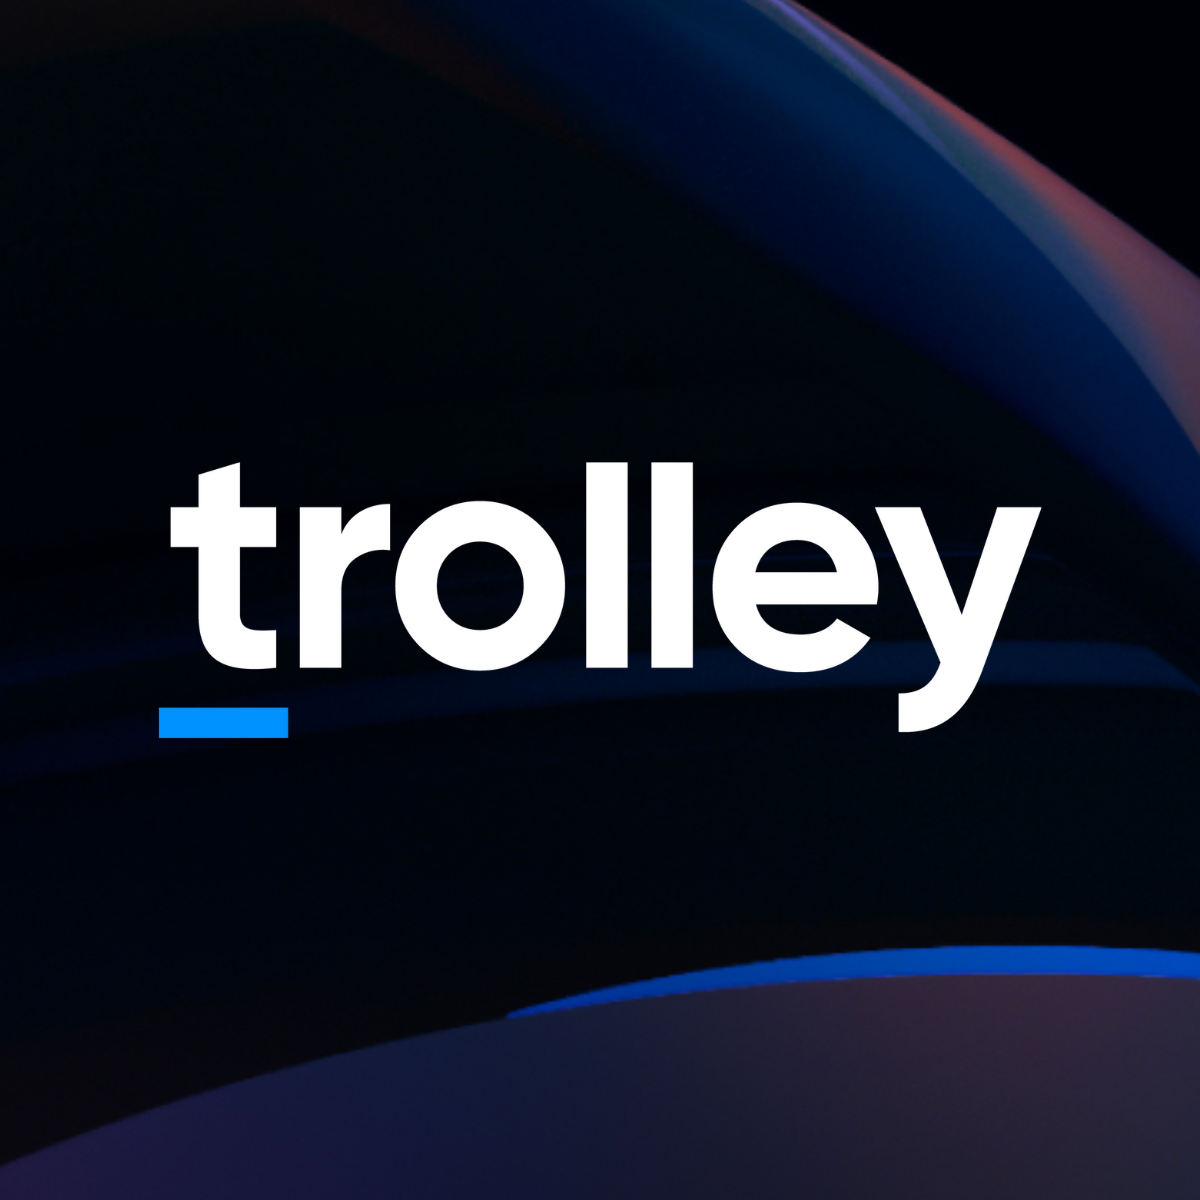 Trolley logo on a stylized background.